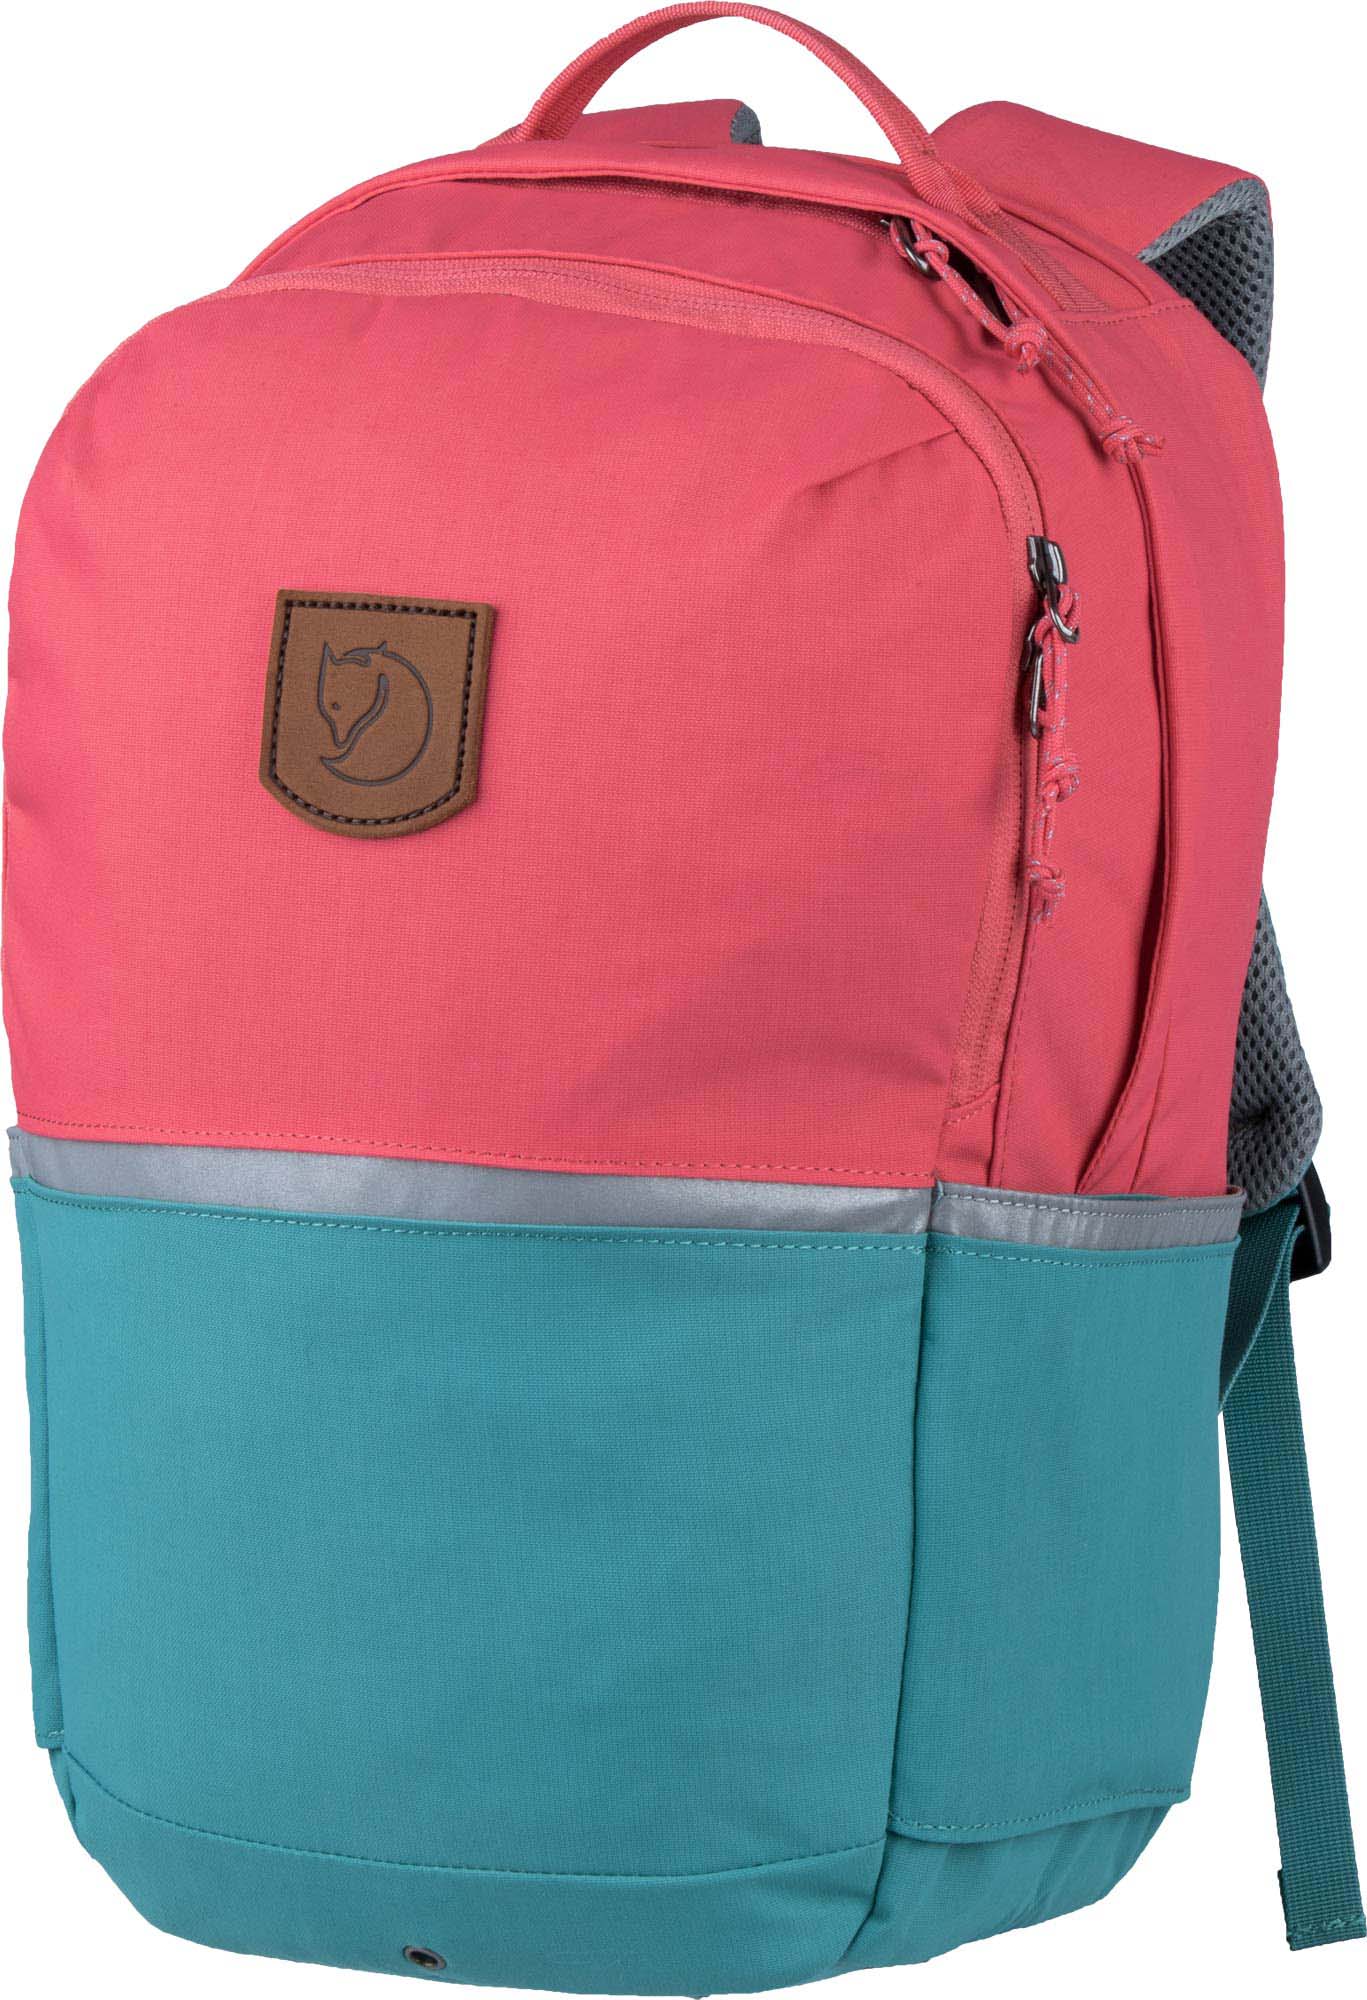 Girls’ backpack